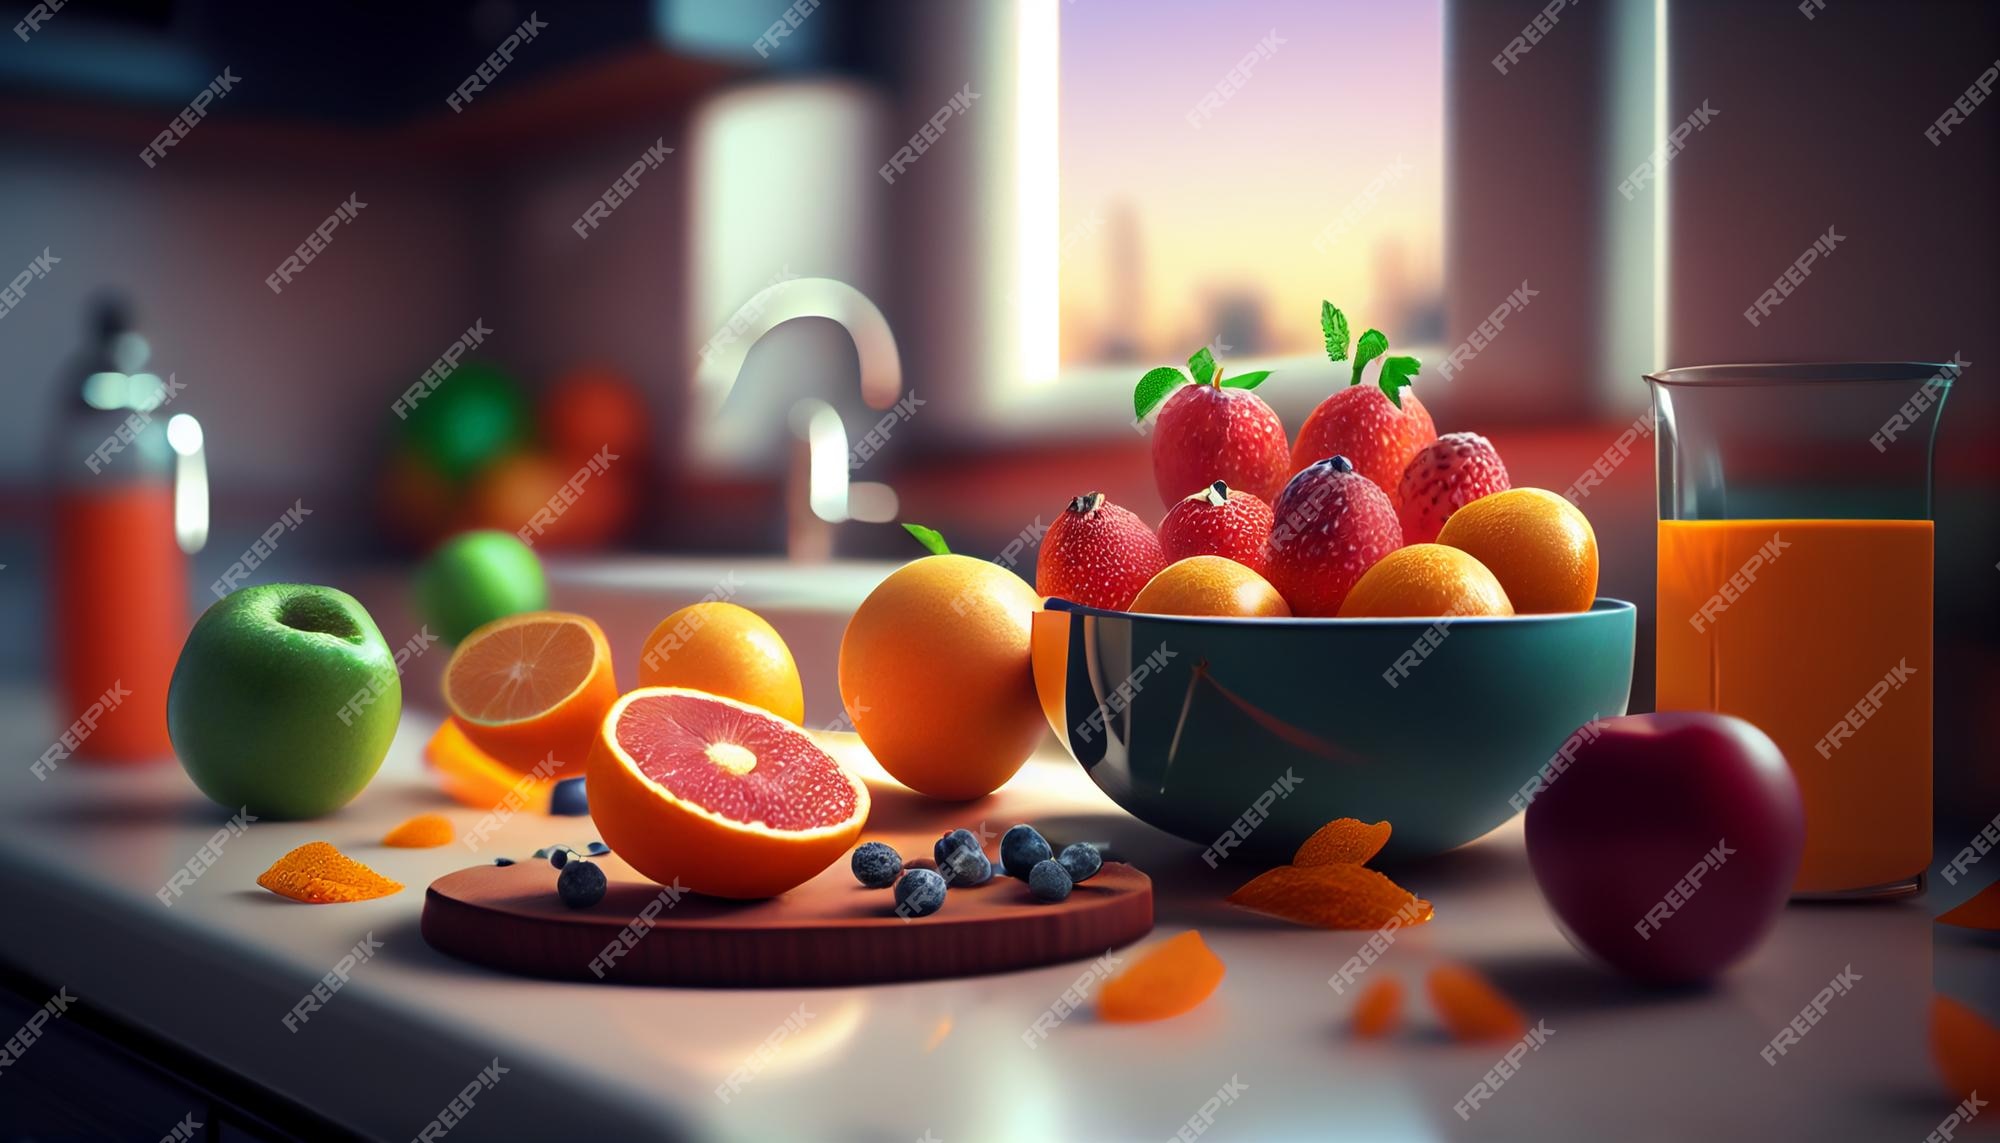 https://img.freepik.com/premium-photo/bowl-fruit-kitchen-counter-with-window-background_188544-12274.jpg?w=2000